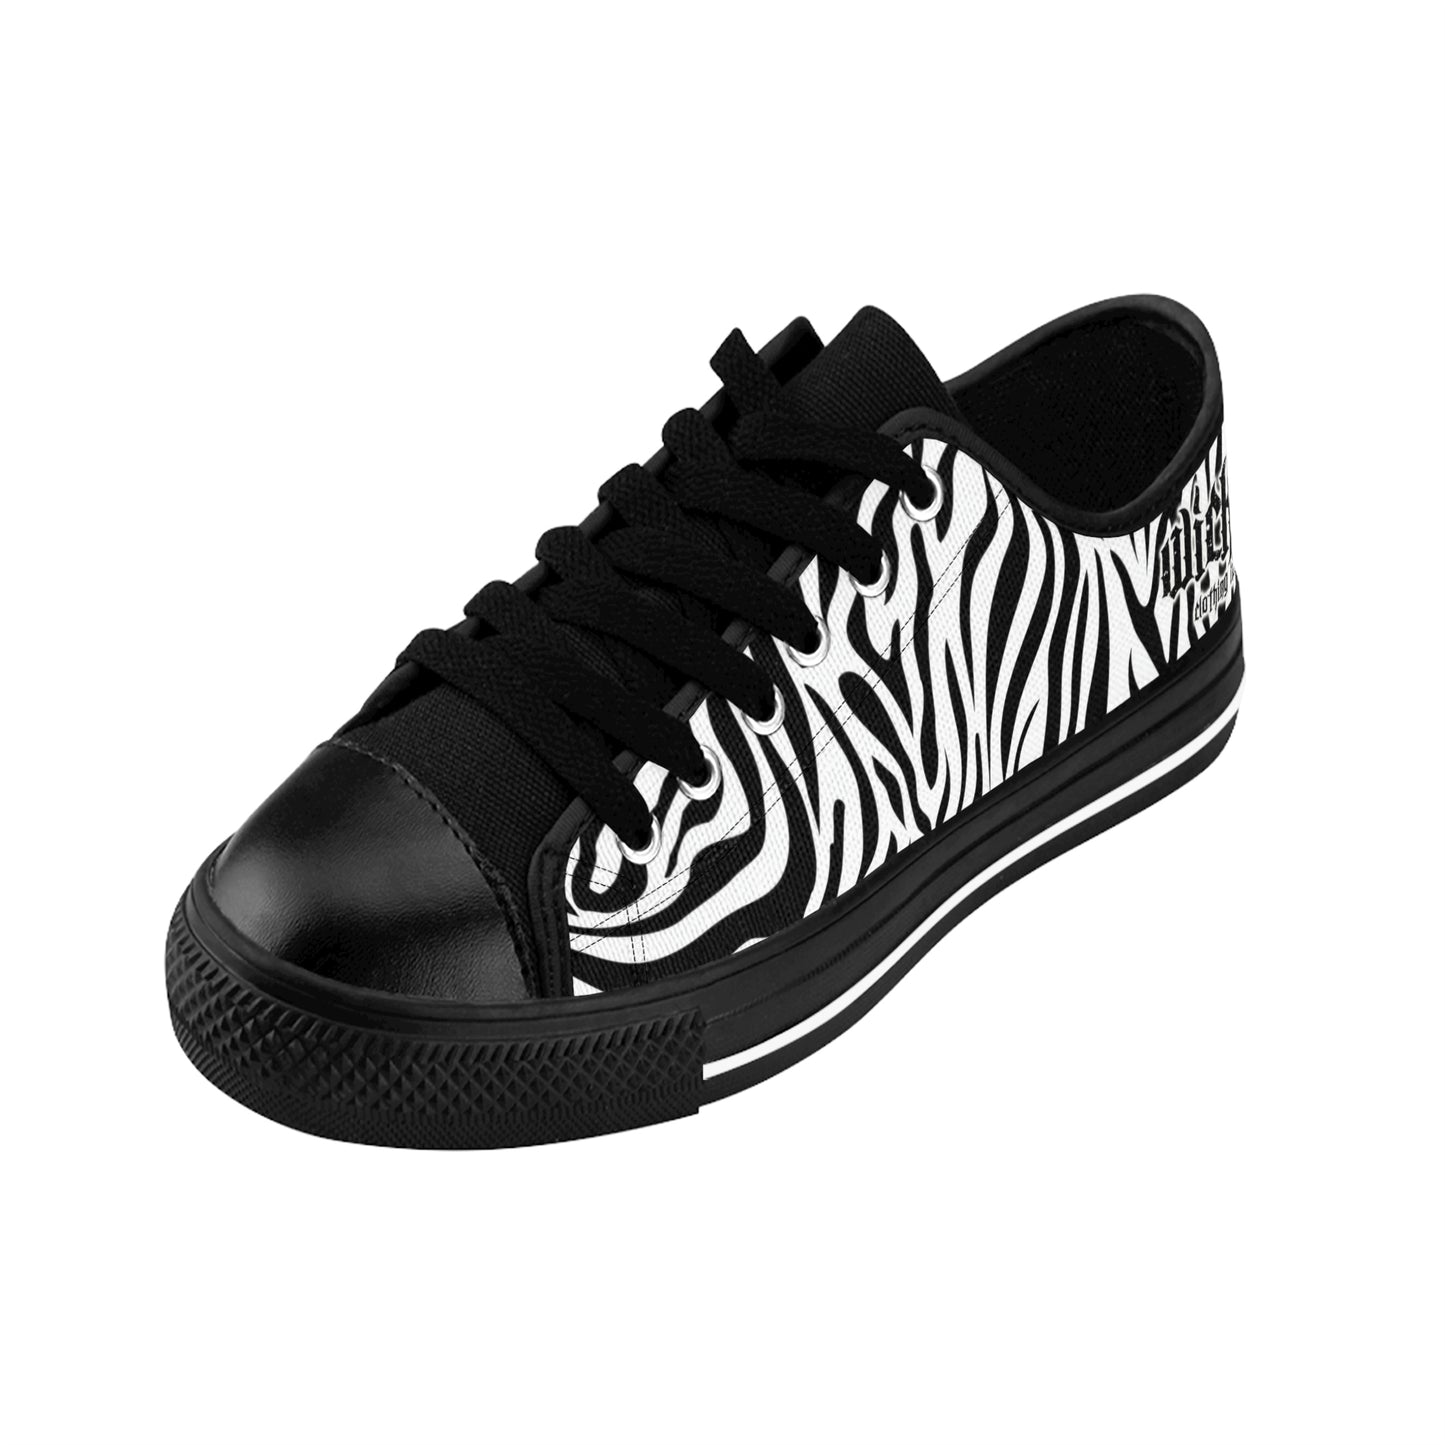 ZEBRA Women's Sneakers